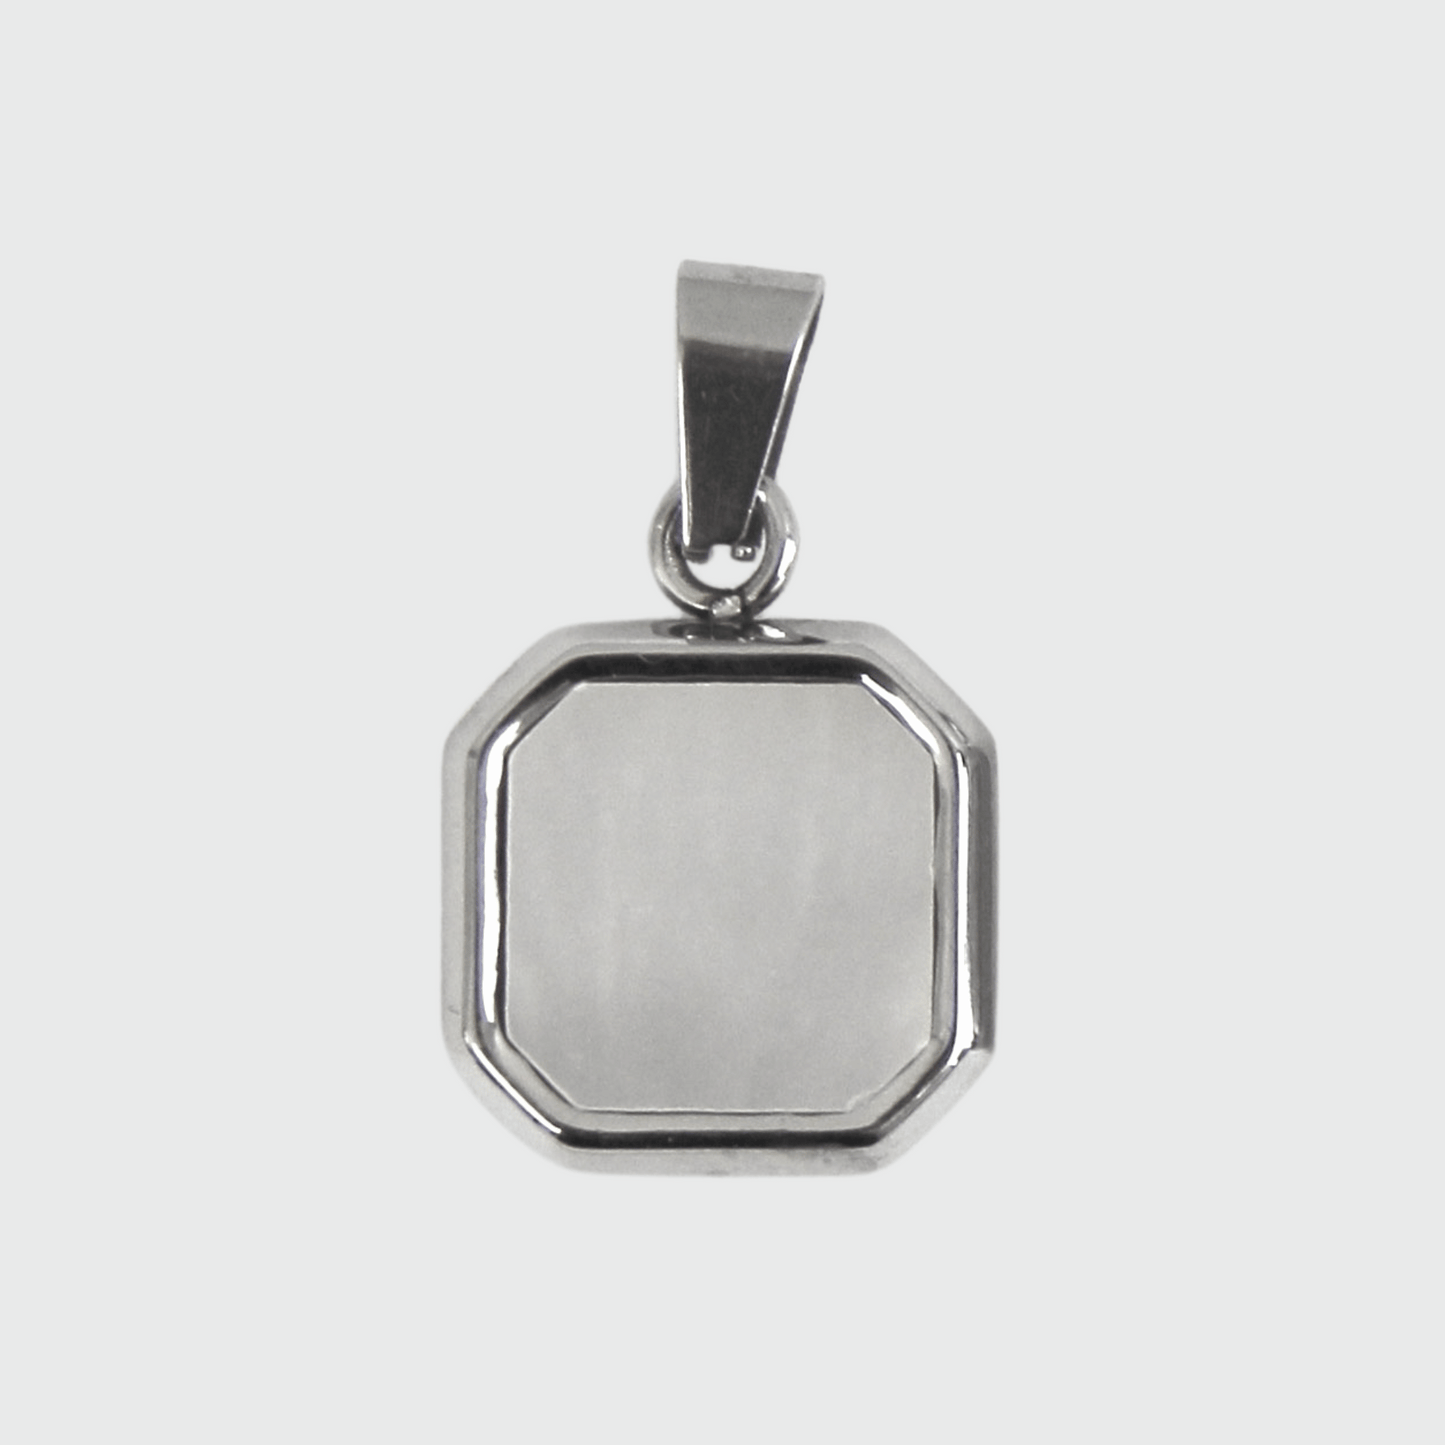 Silver Stainless Steel Black, White or Blue Square Pendant For Men - Boutique Wear RENN